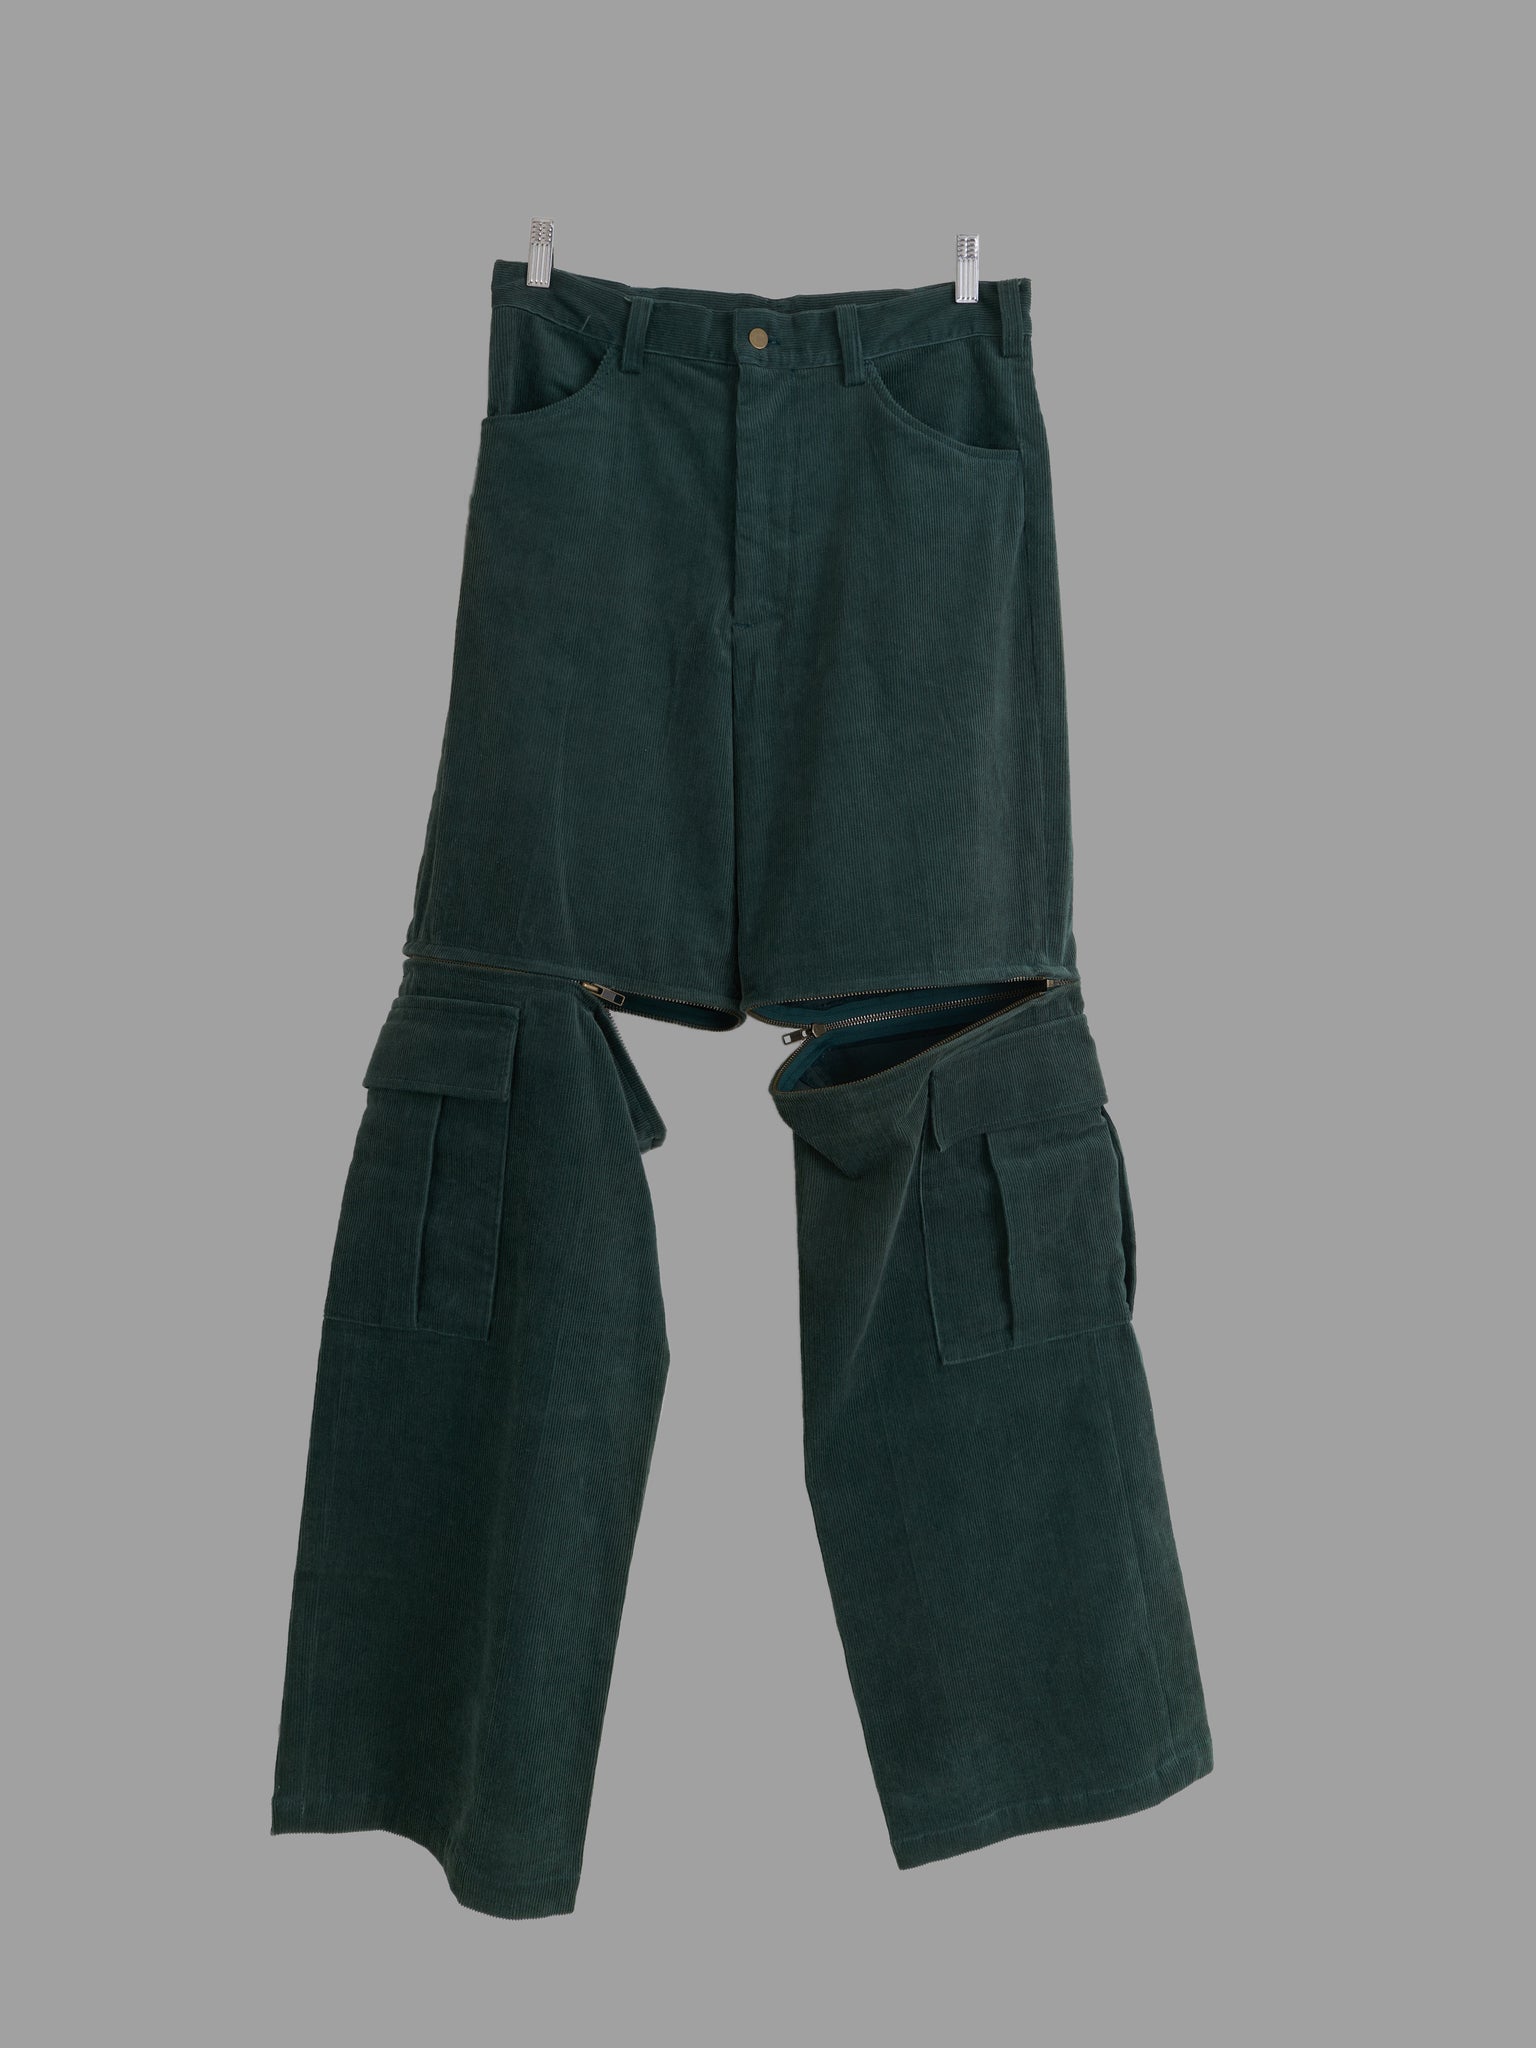 Keita Maruyama Homme 1990s dark green corduroy two way zip off trousers - size M